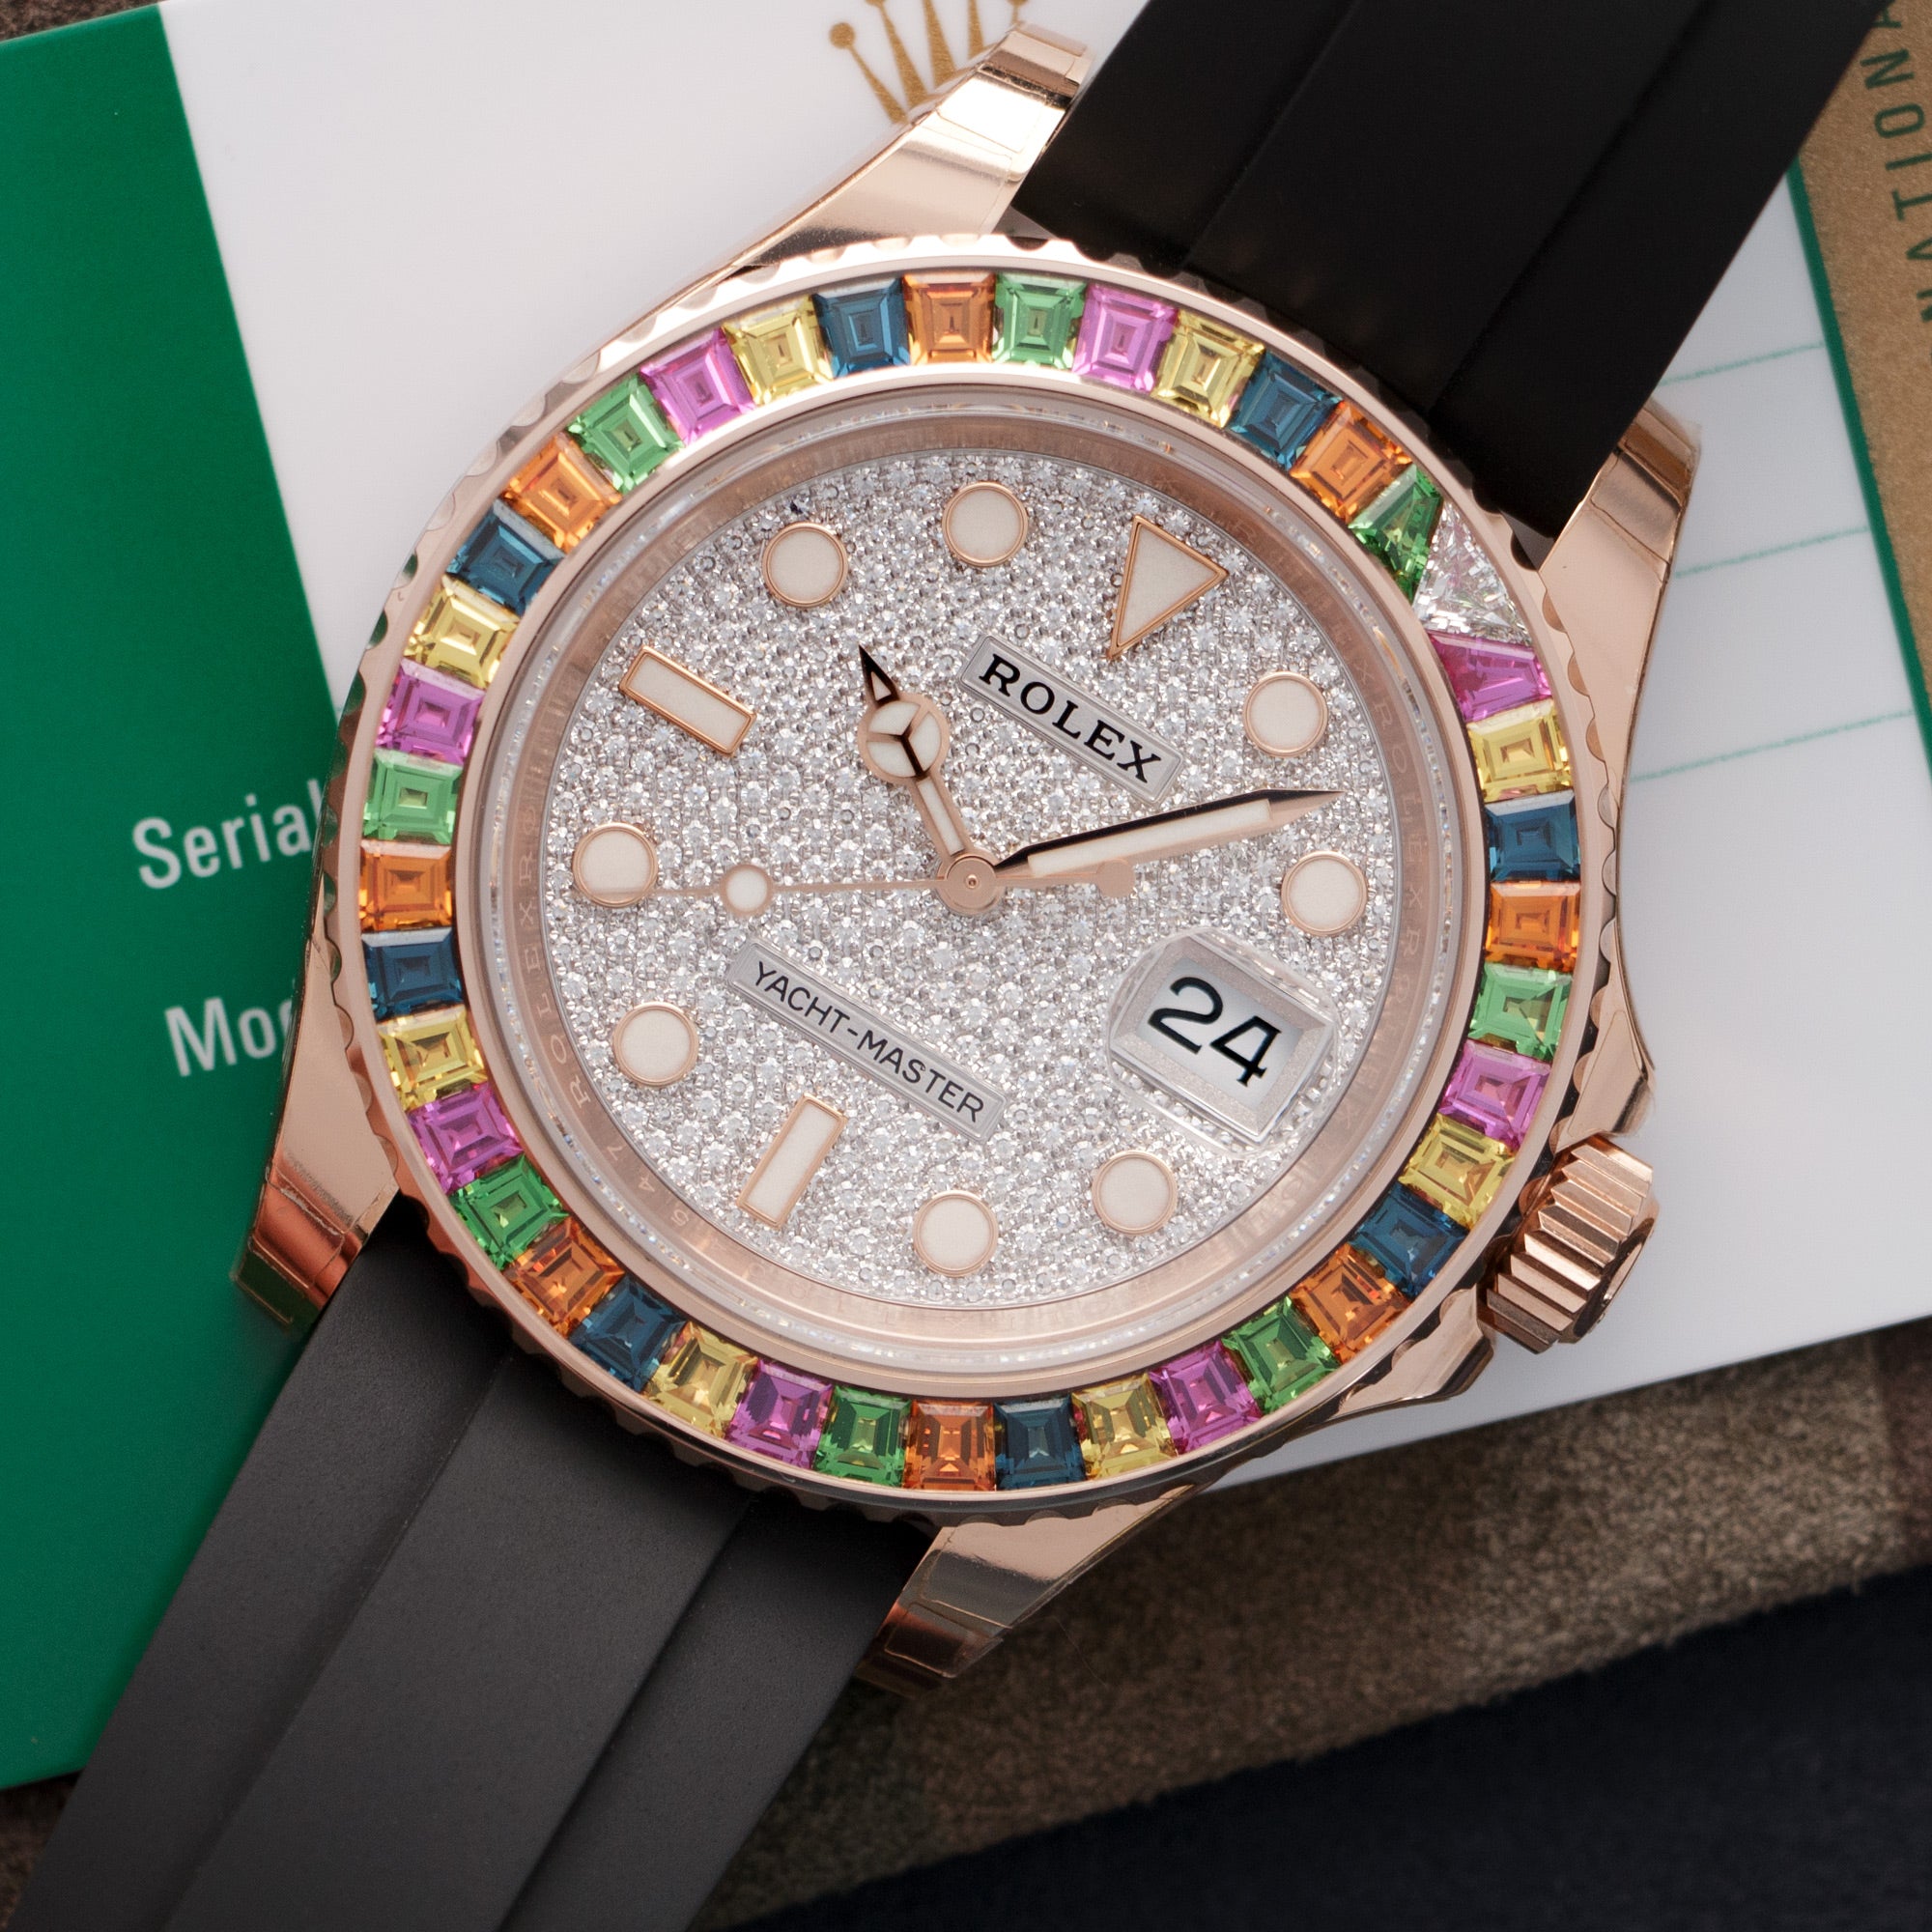 Rolex - Rolex Rose Gold Yacht-Master Rainbow Diamond Watch Ref. 116695 - The Keystone Watches